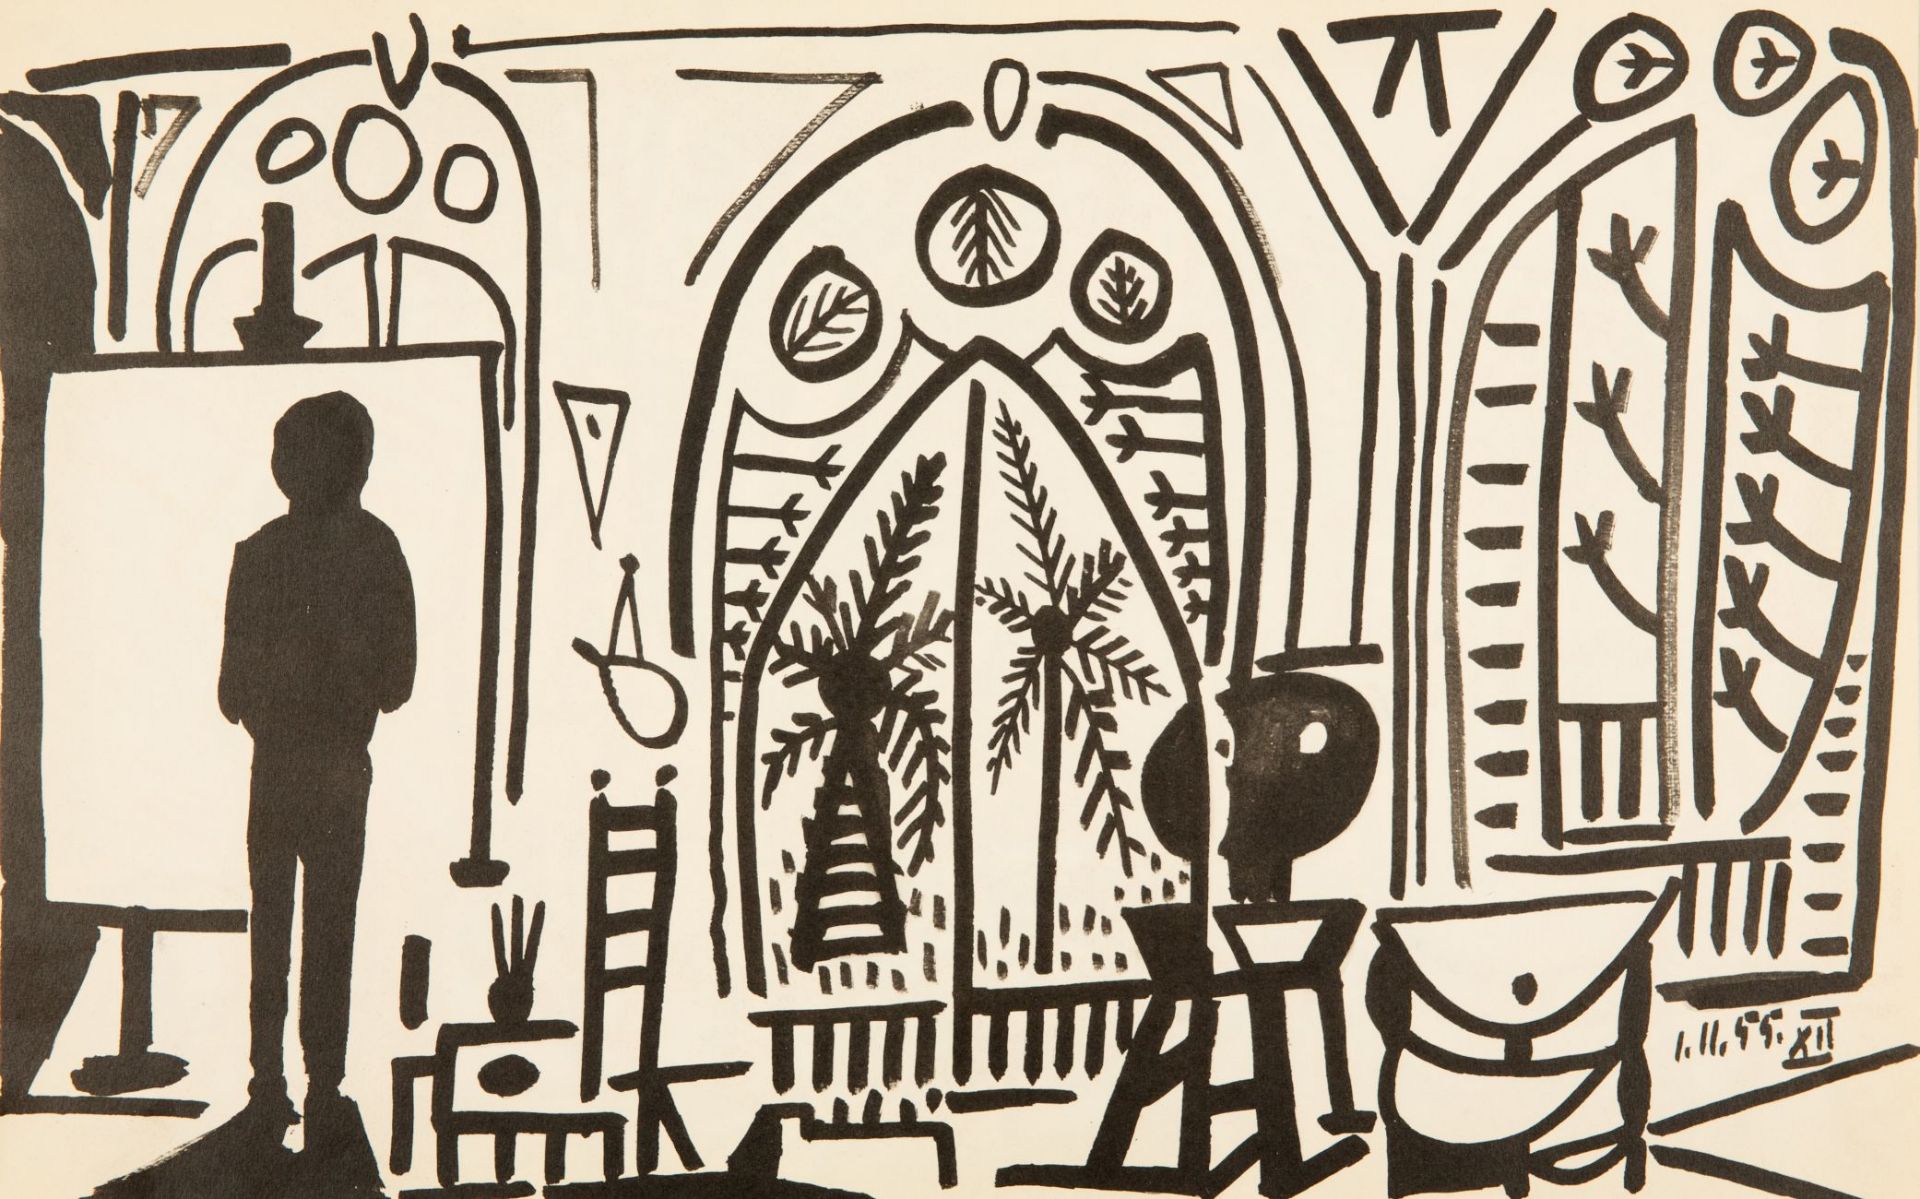 Pablo Picasso, Carnet de la Californie. Köln 1959. 37 Tafeln nach Picasso + Beiheft. Ex. D 403/500.